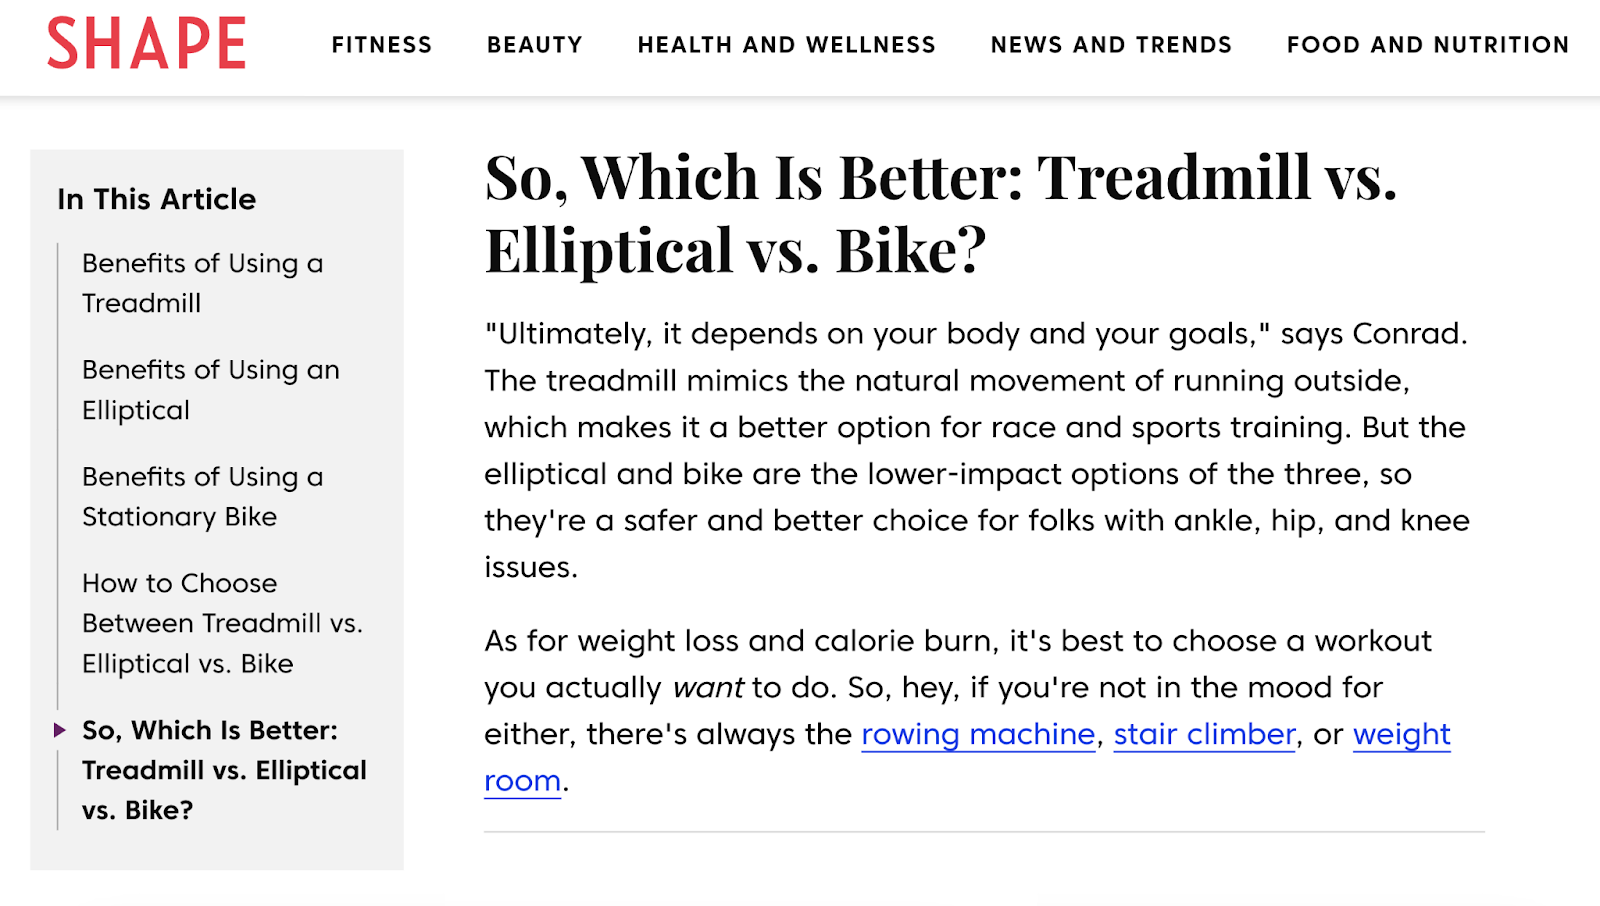  Treadmill vs. Elliptical vs. Bike?"